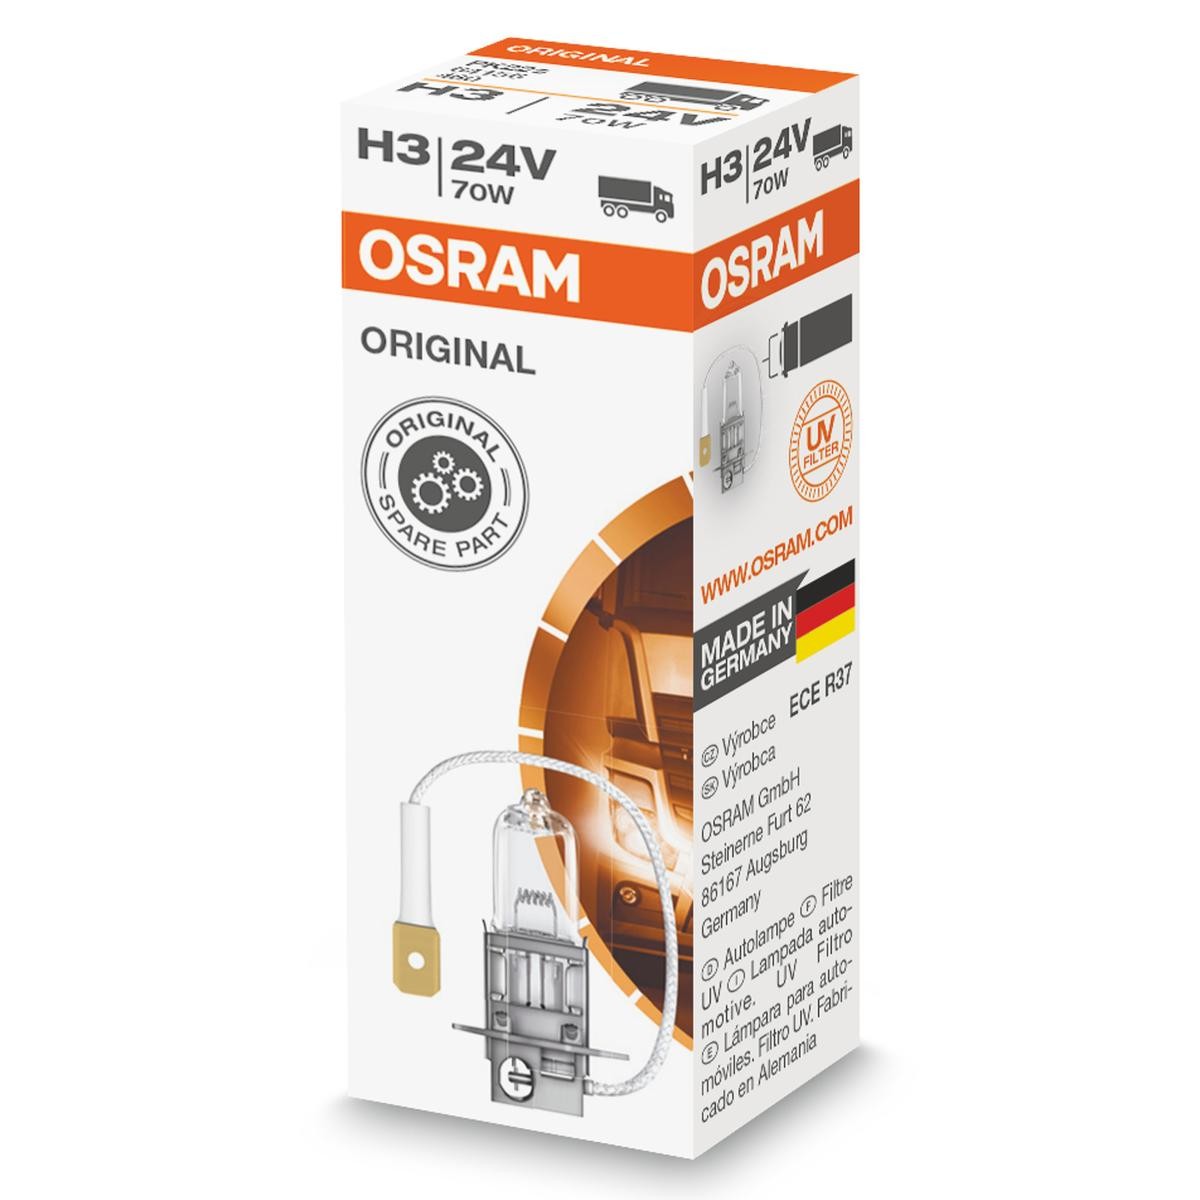 H3 OSRAM ORIGINAL LINE H3 24V 70W PK22s, 3200K, Halogen High beam bulb 64156 buy